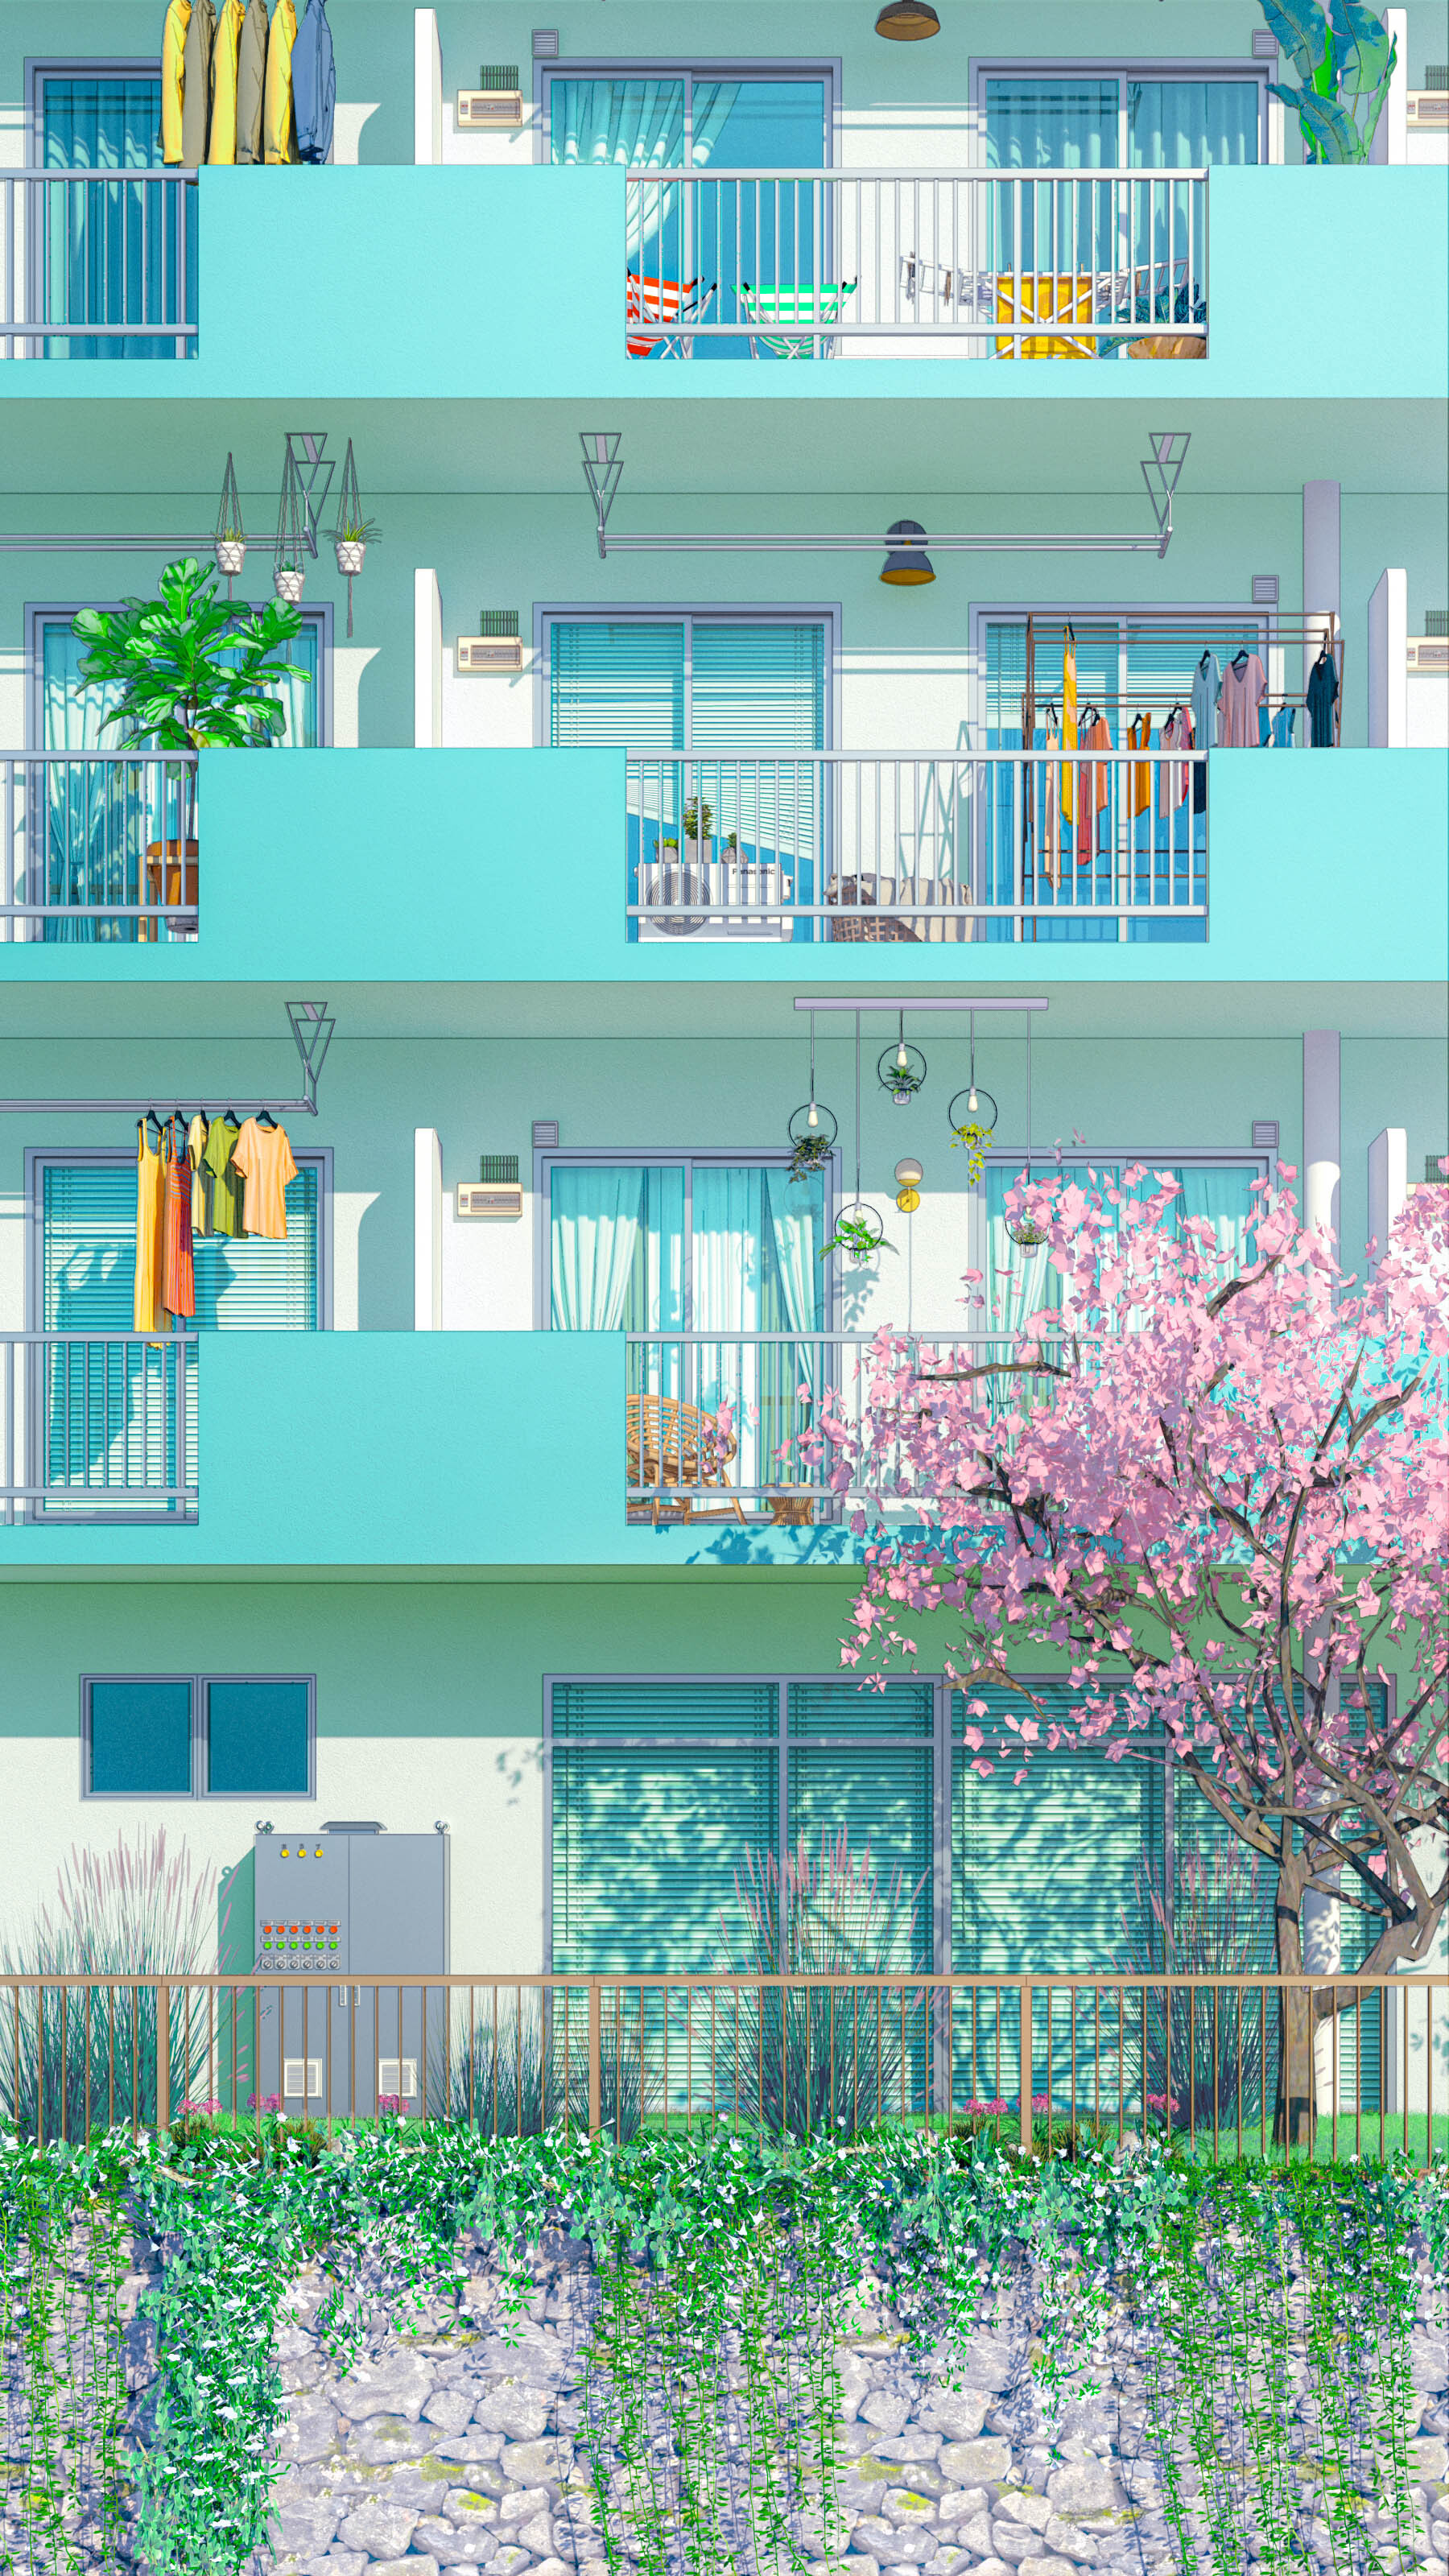 Artwork Digital Art Building Balcony Trees 1800x3200